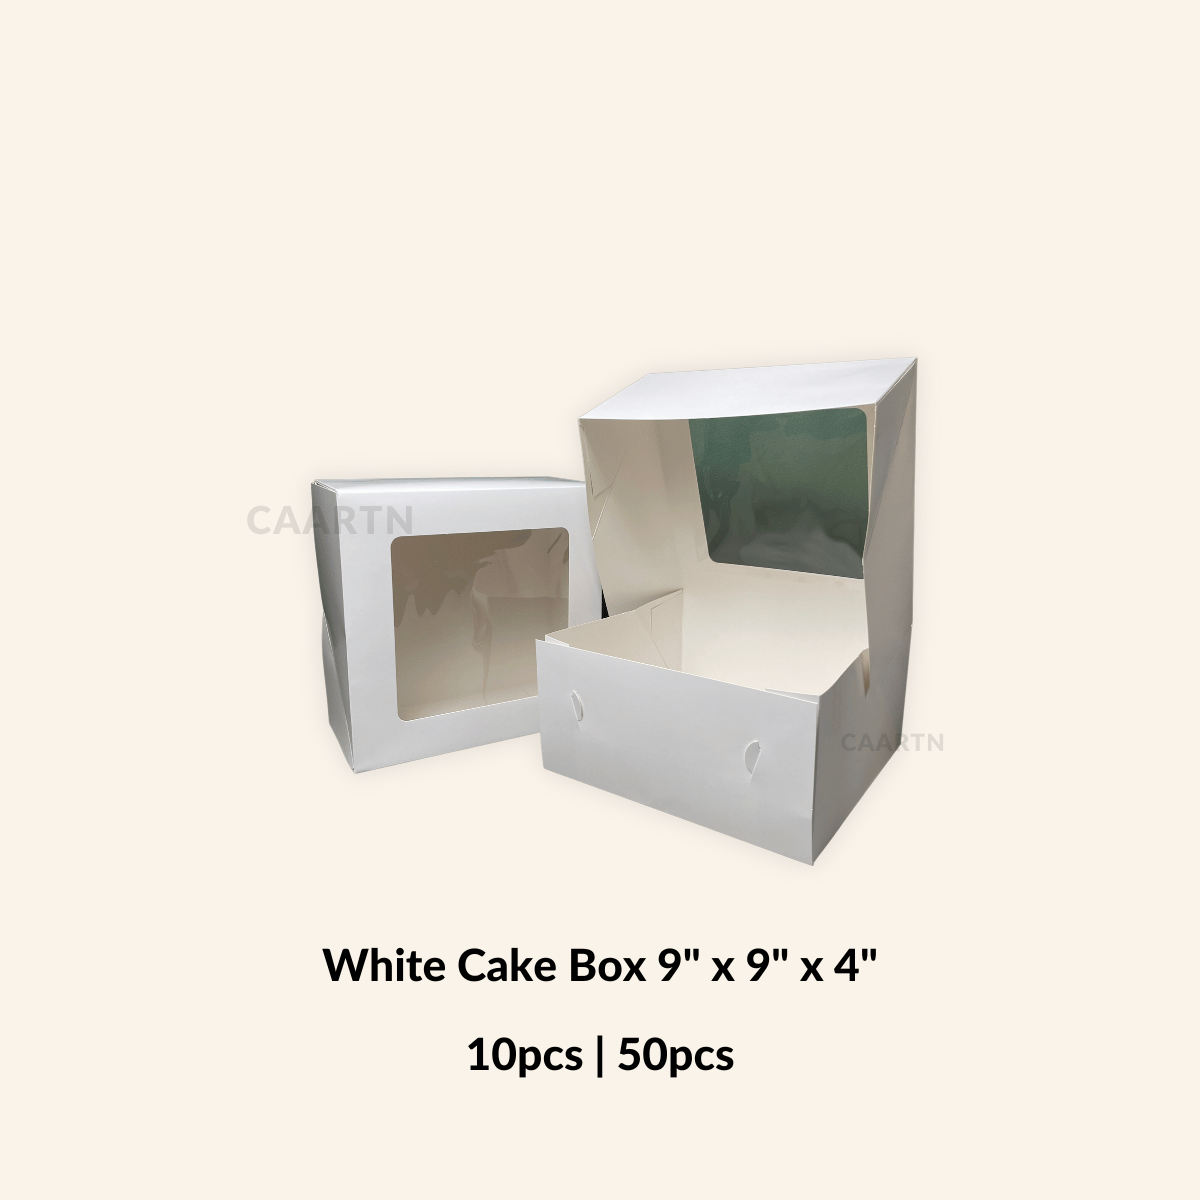 White Cake Box 9" x 9" x 4"